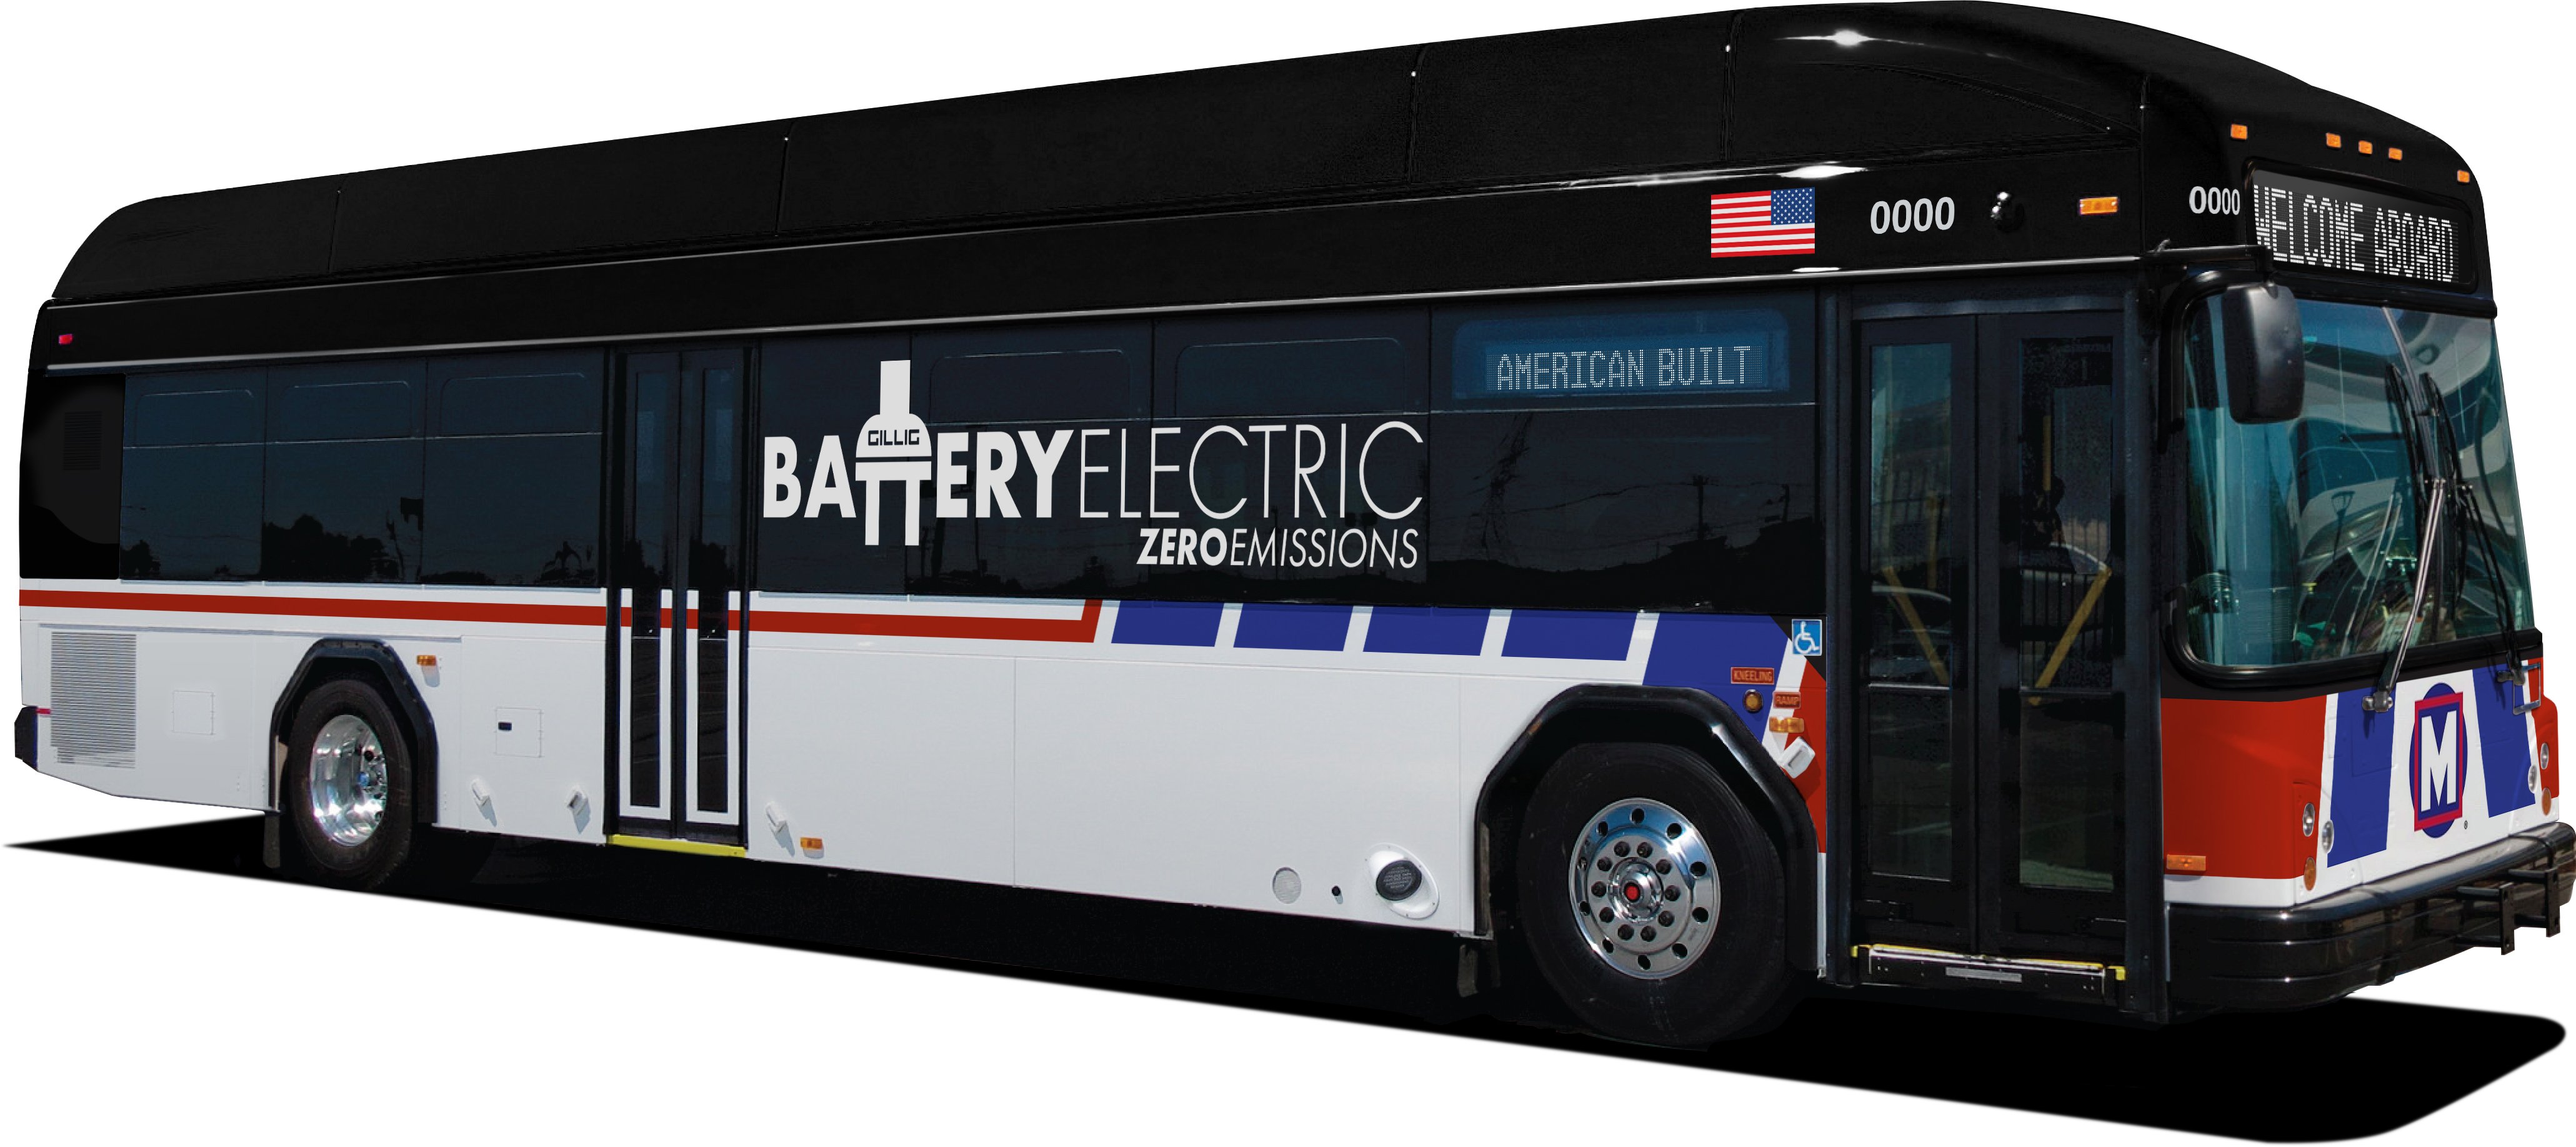 Metro to Add Electric Bus Technology to Fleet in 2020 - Metrostlouis.org Site | Metro ...